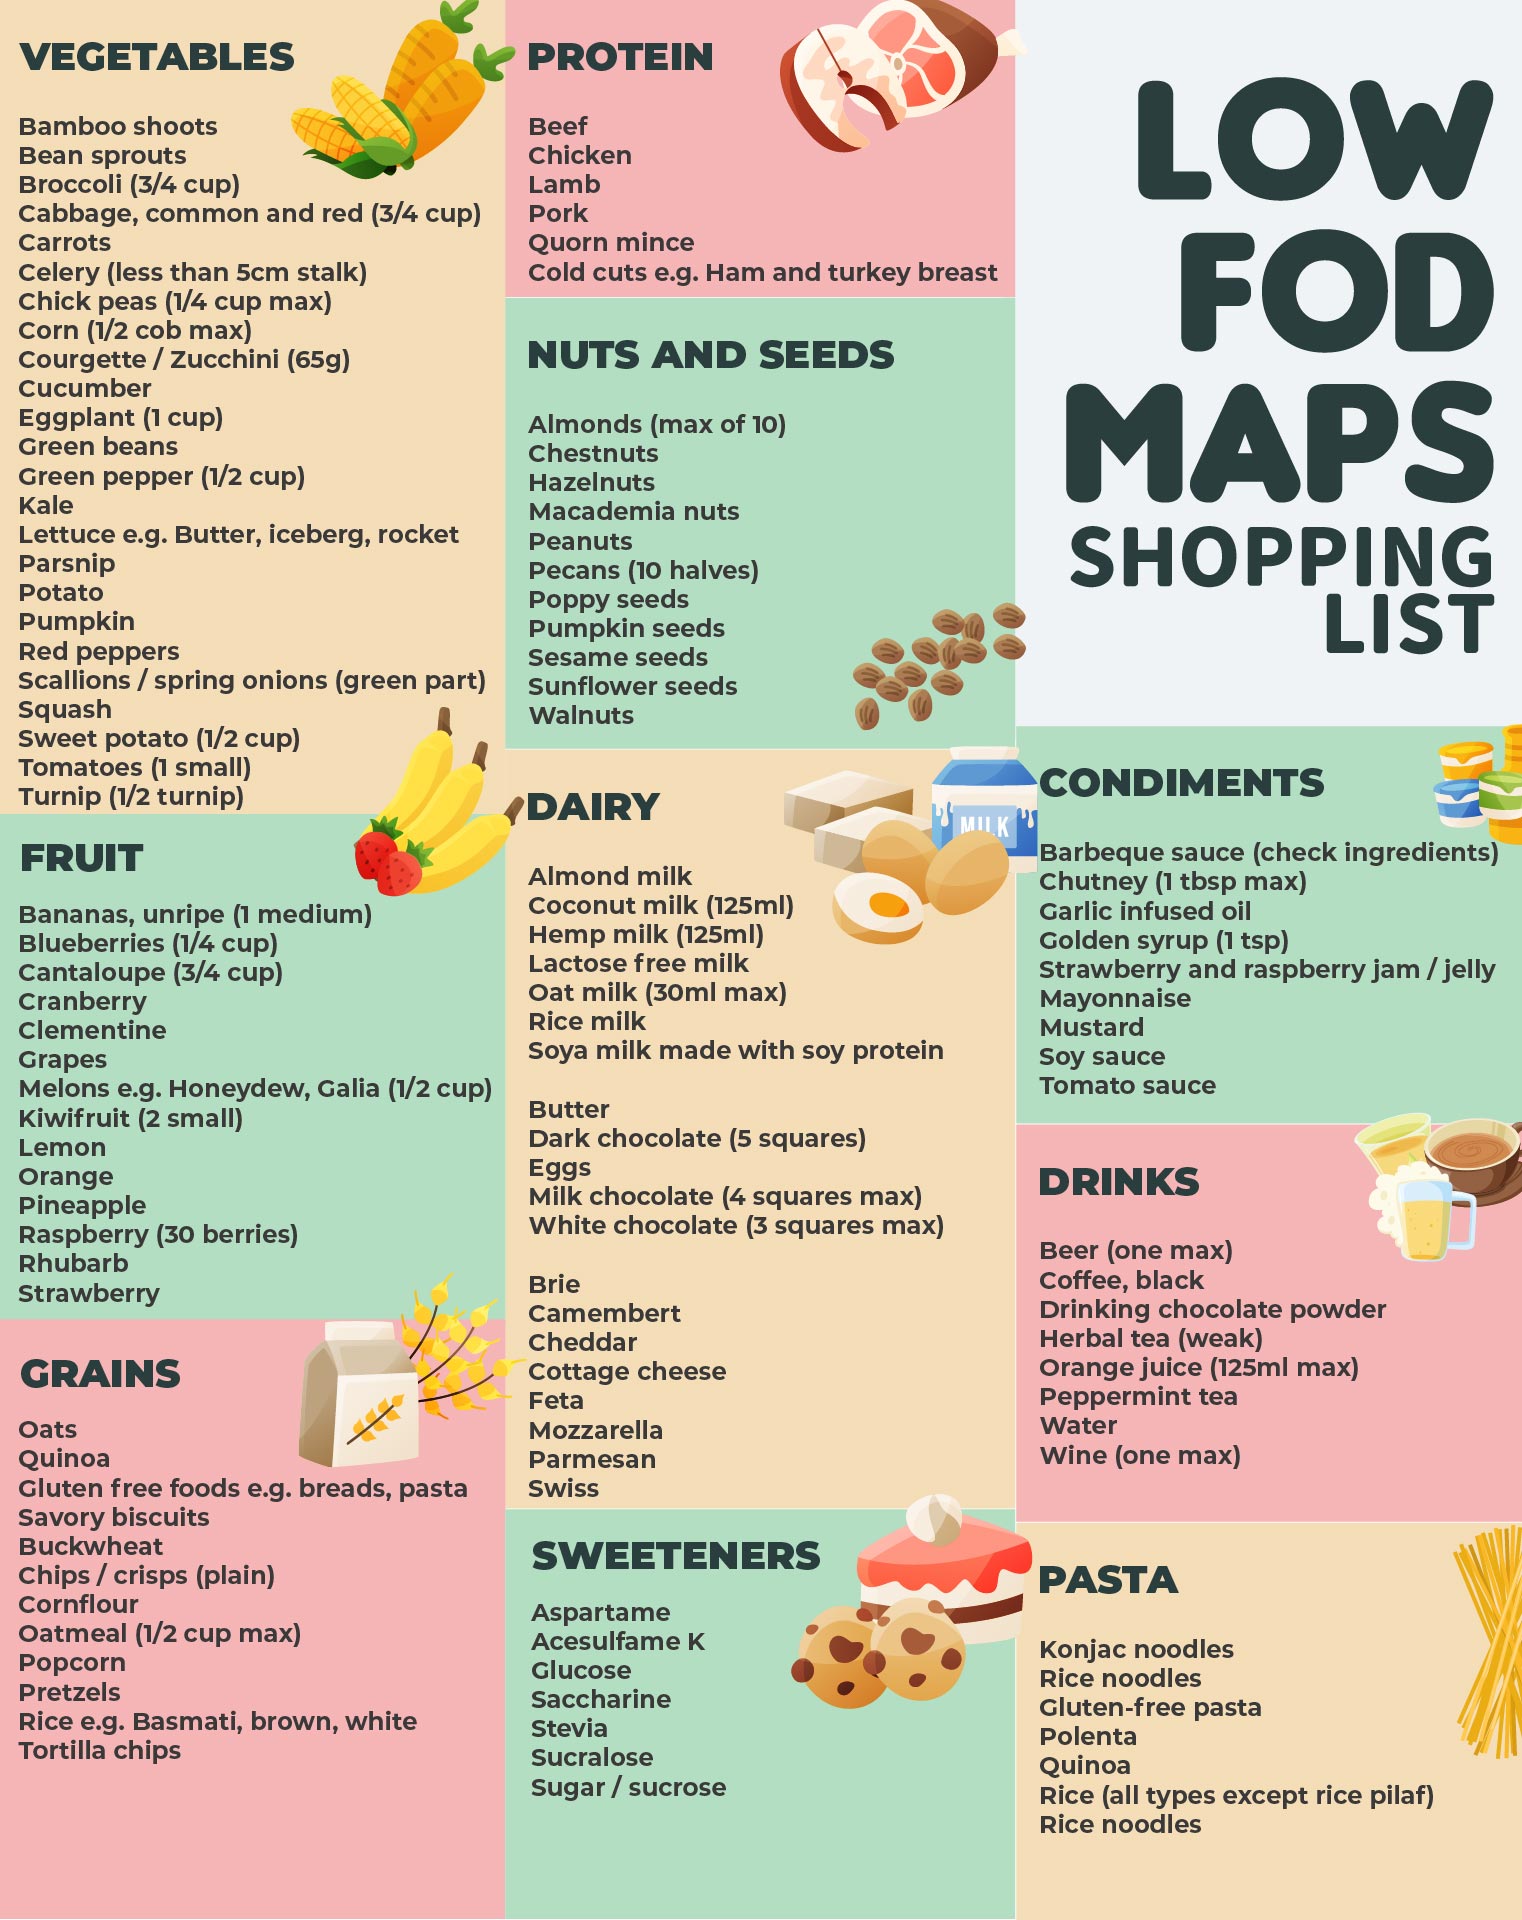 High FODMAP Food List